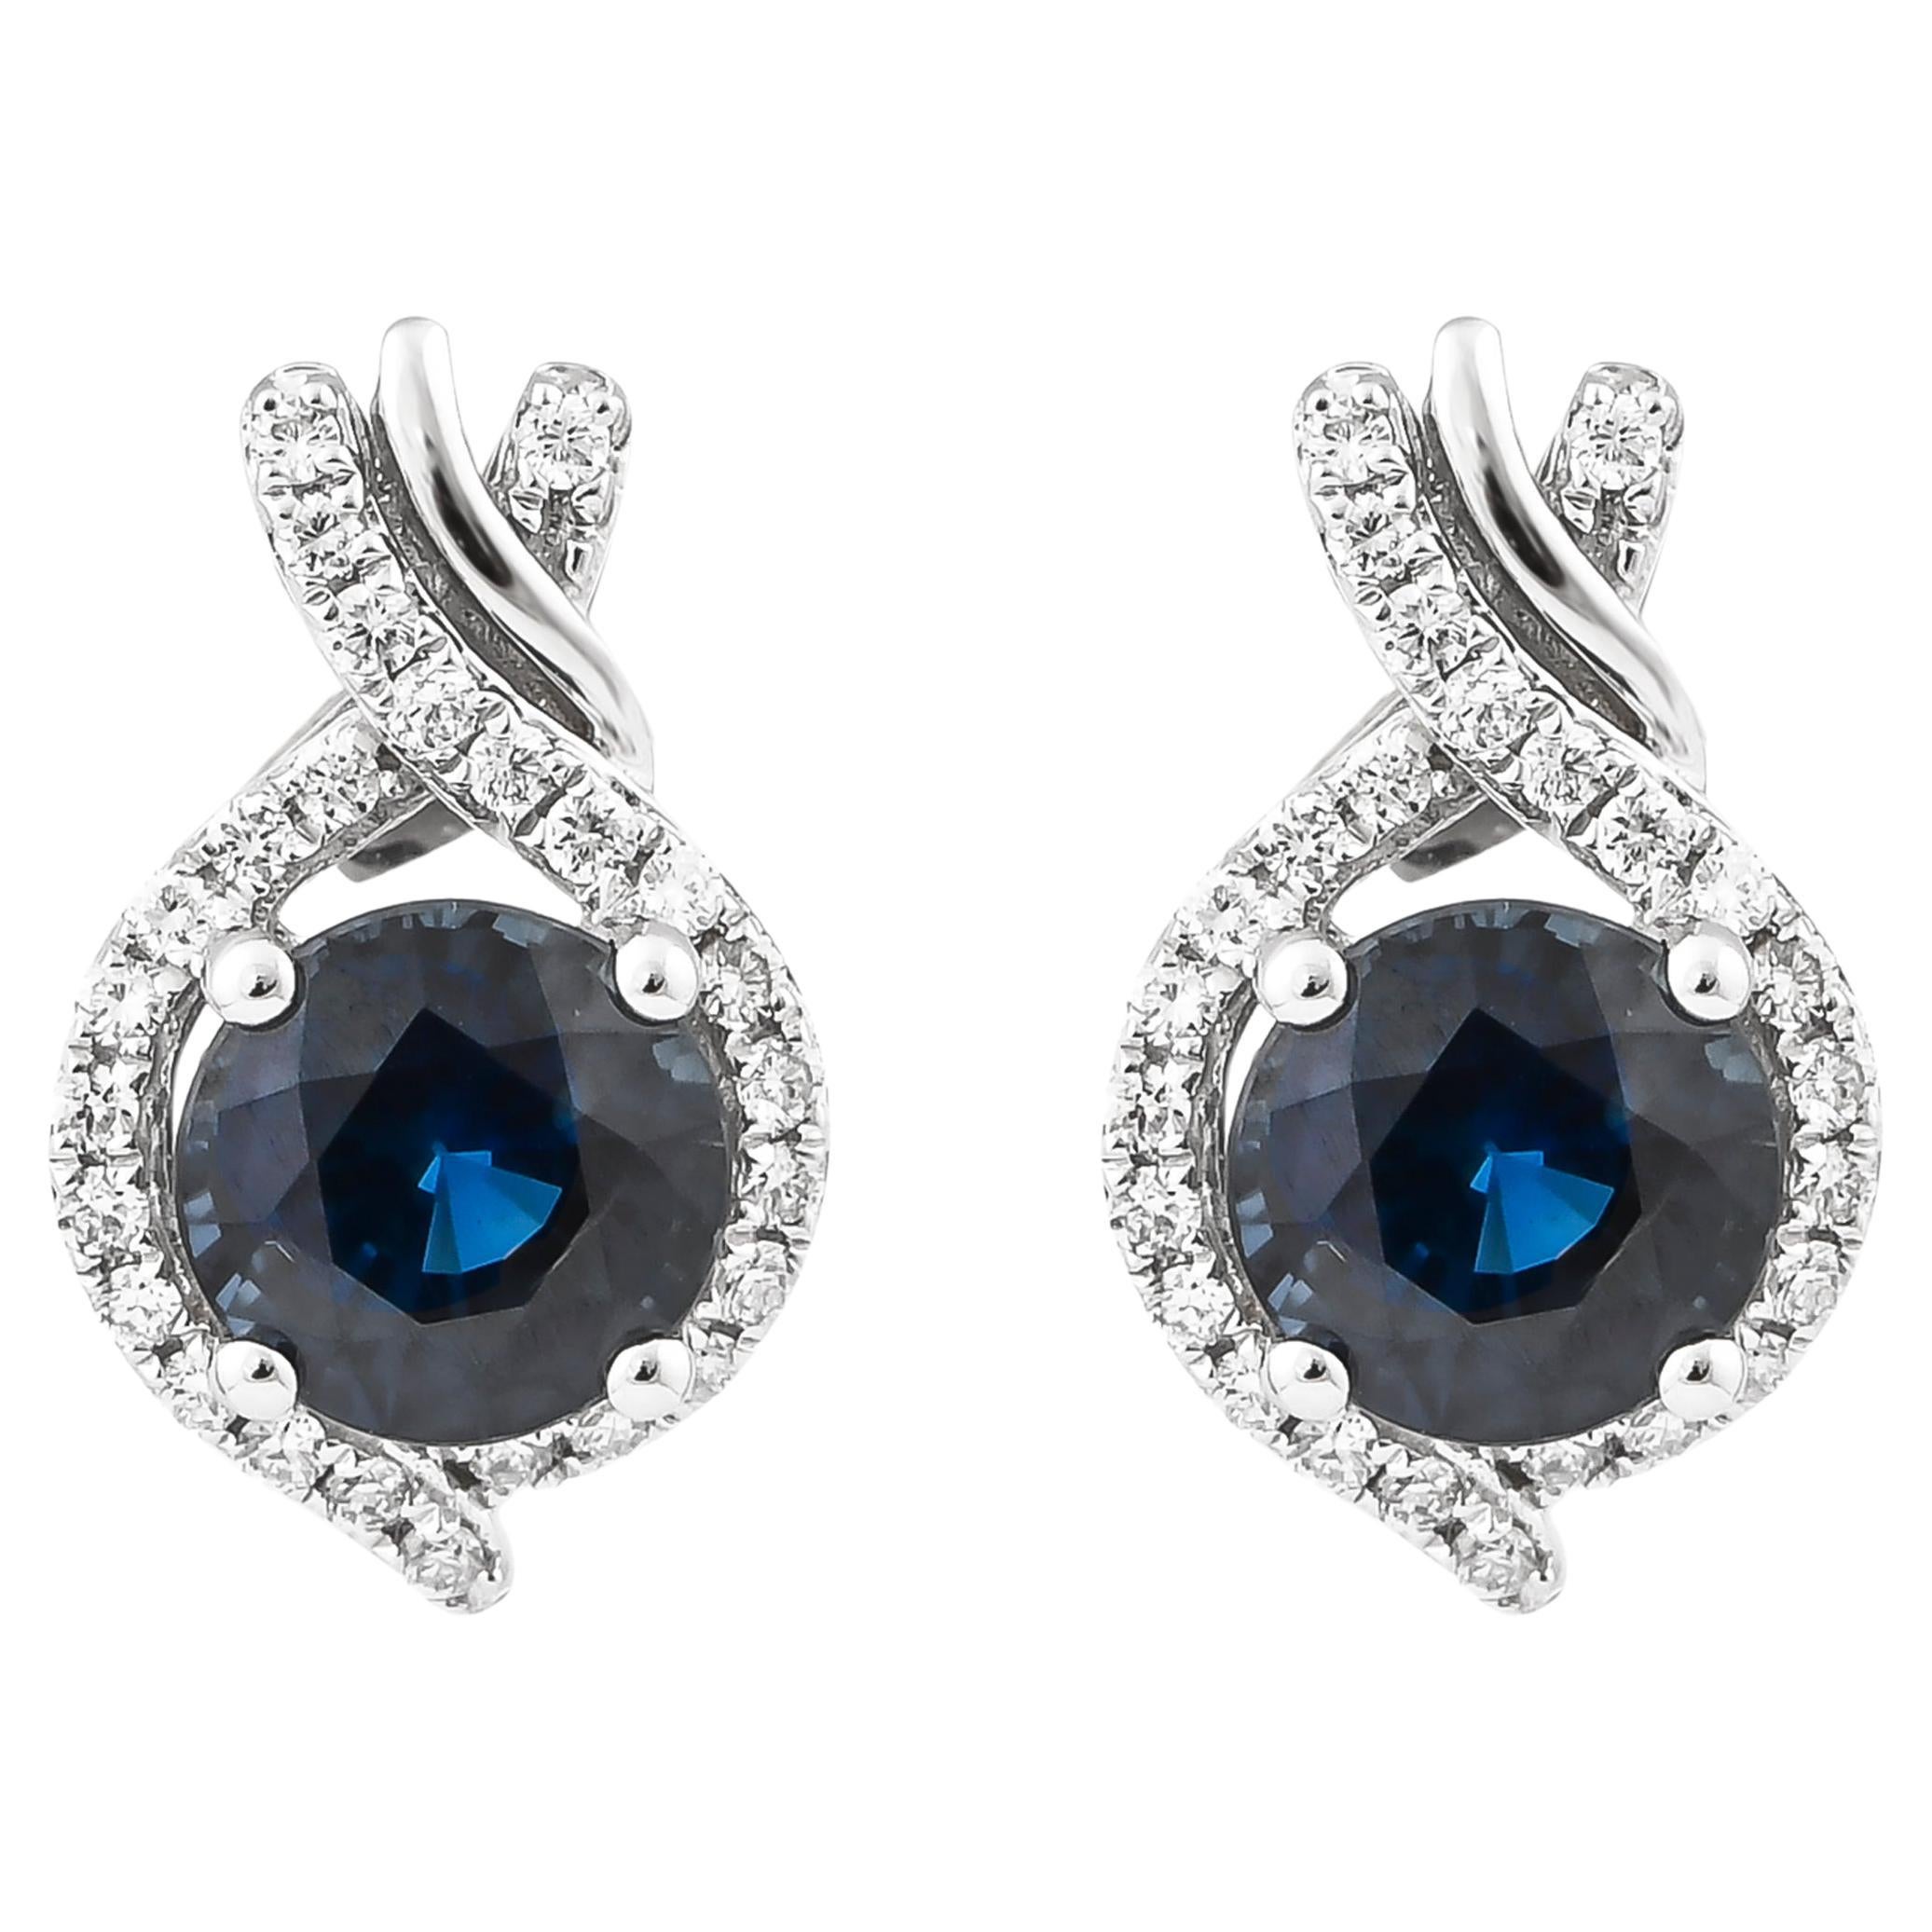 1.9 Carat Blue Sapphire and Diamond Earring in 18 Karat White Gold